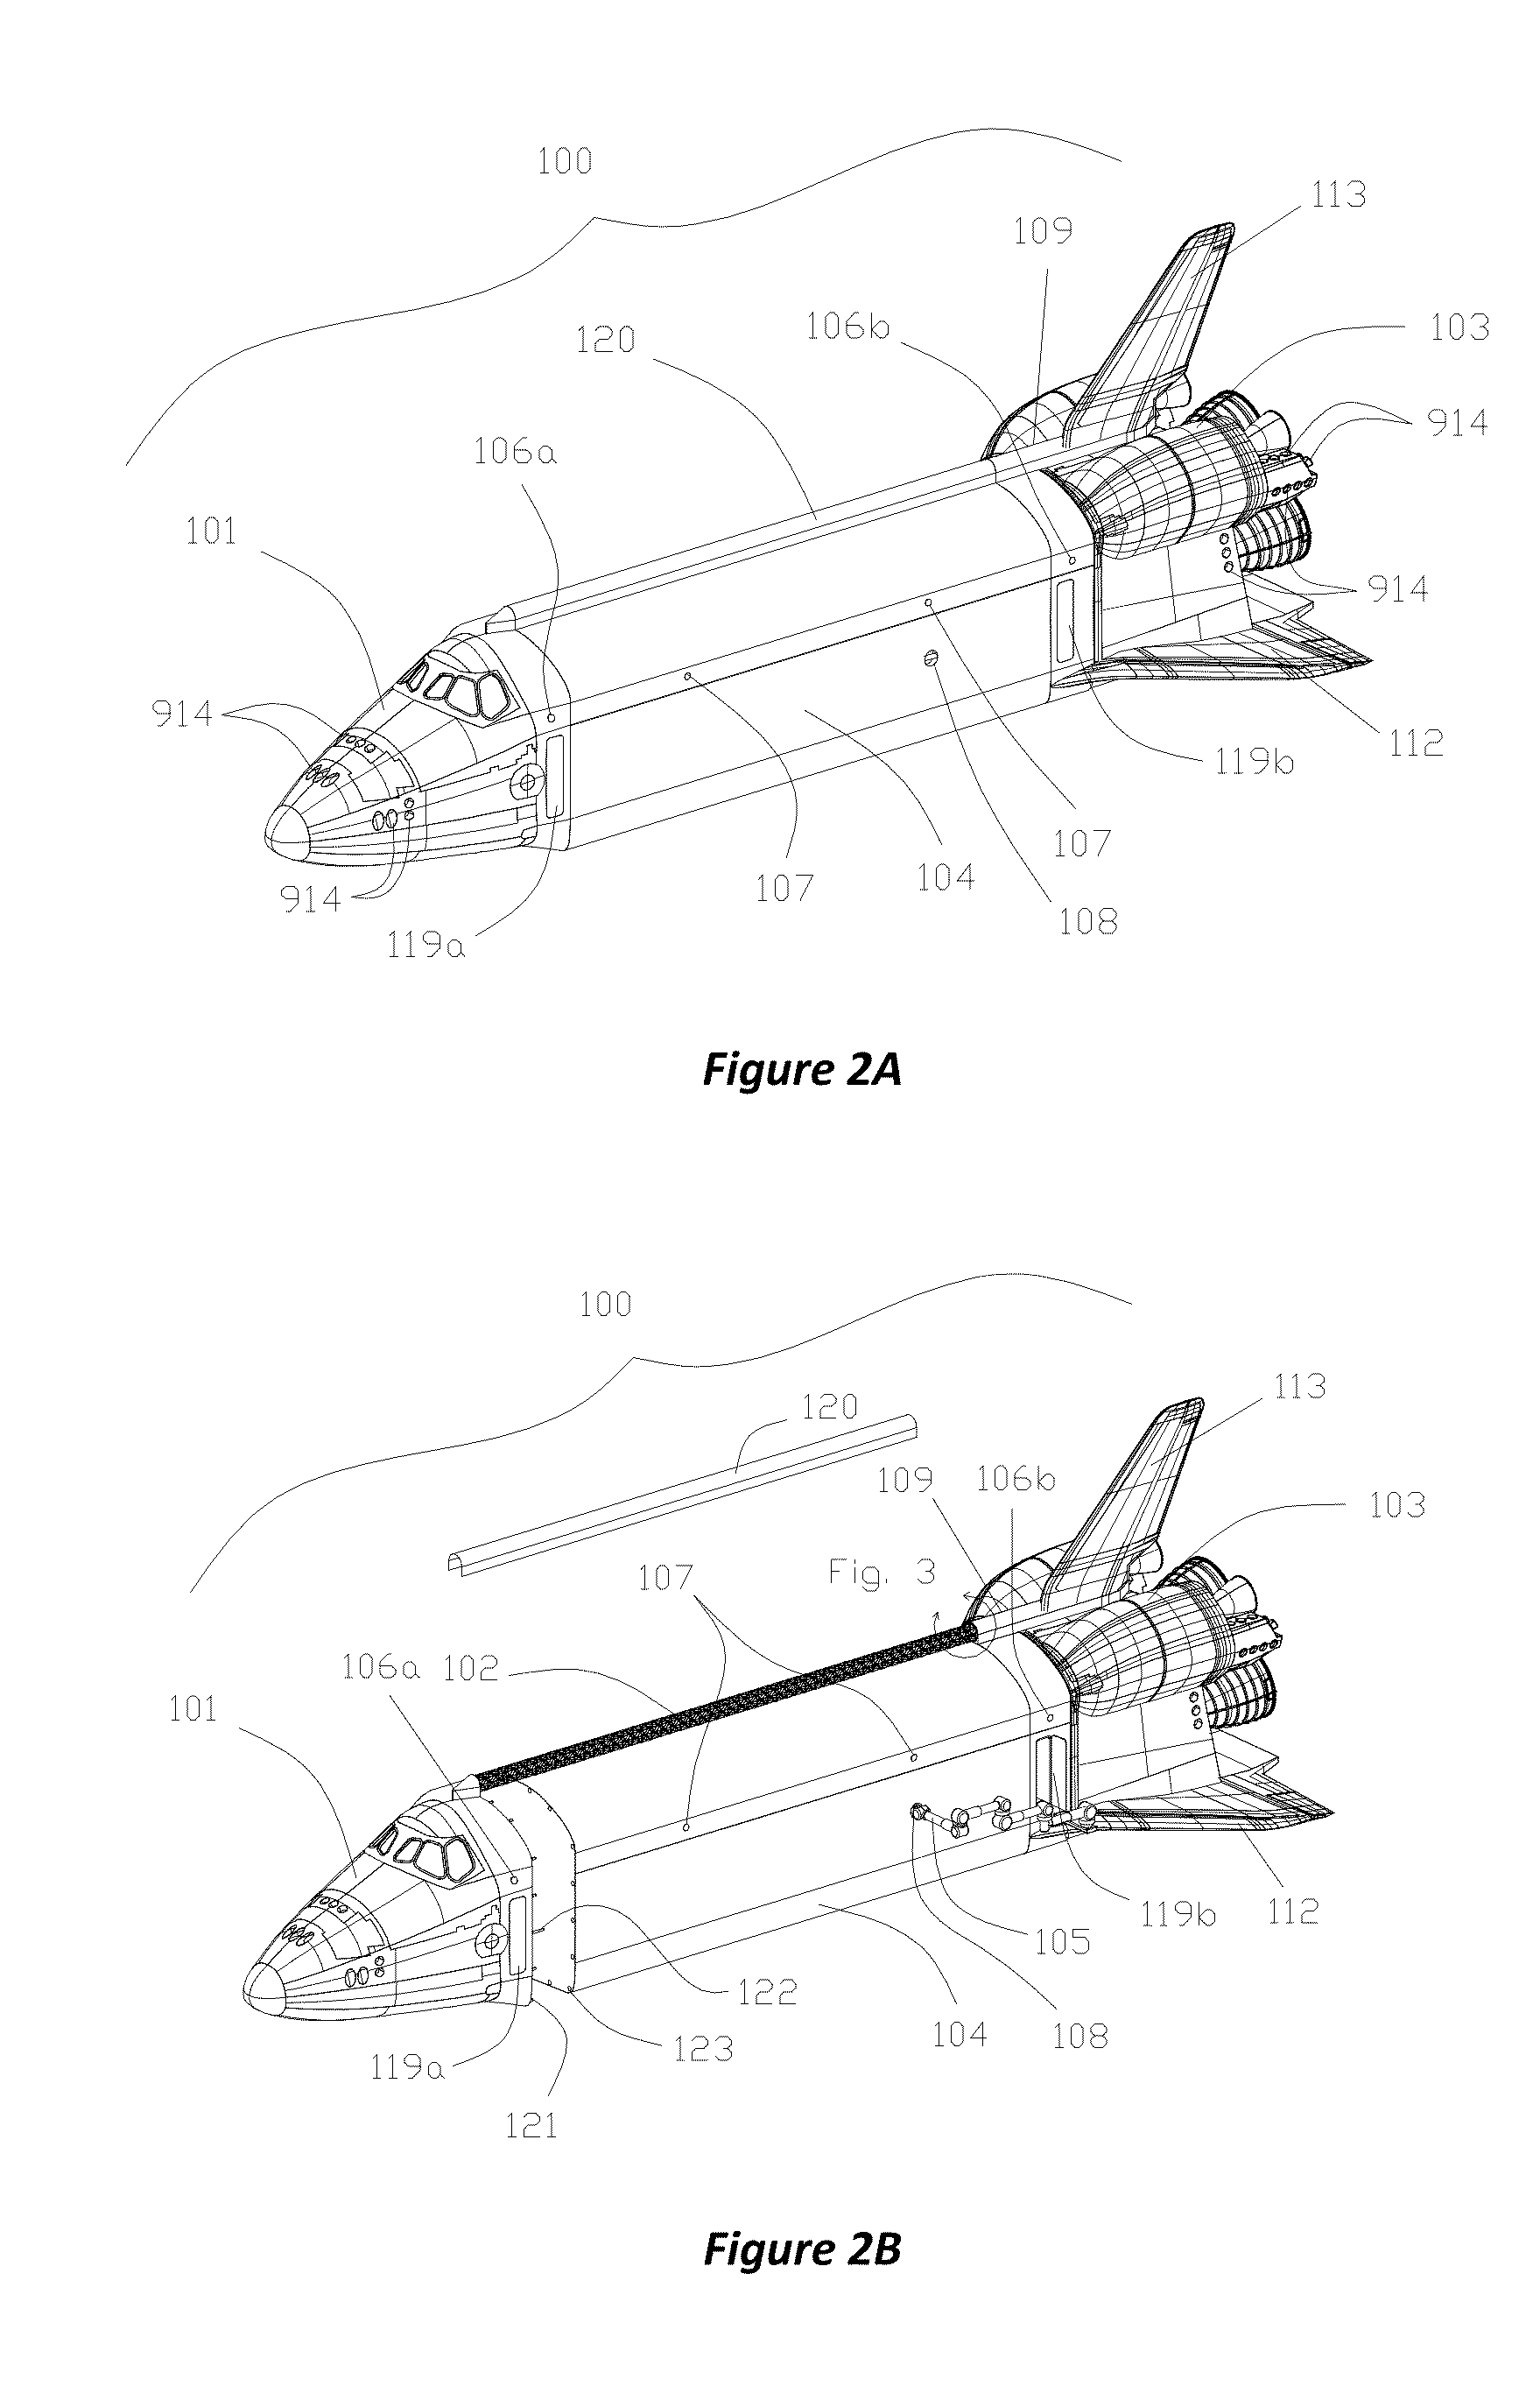 Space shuttle orbiter and return system